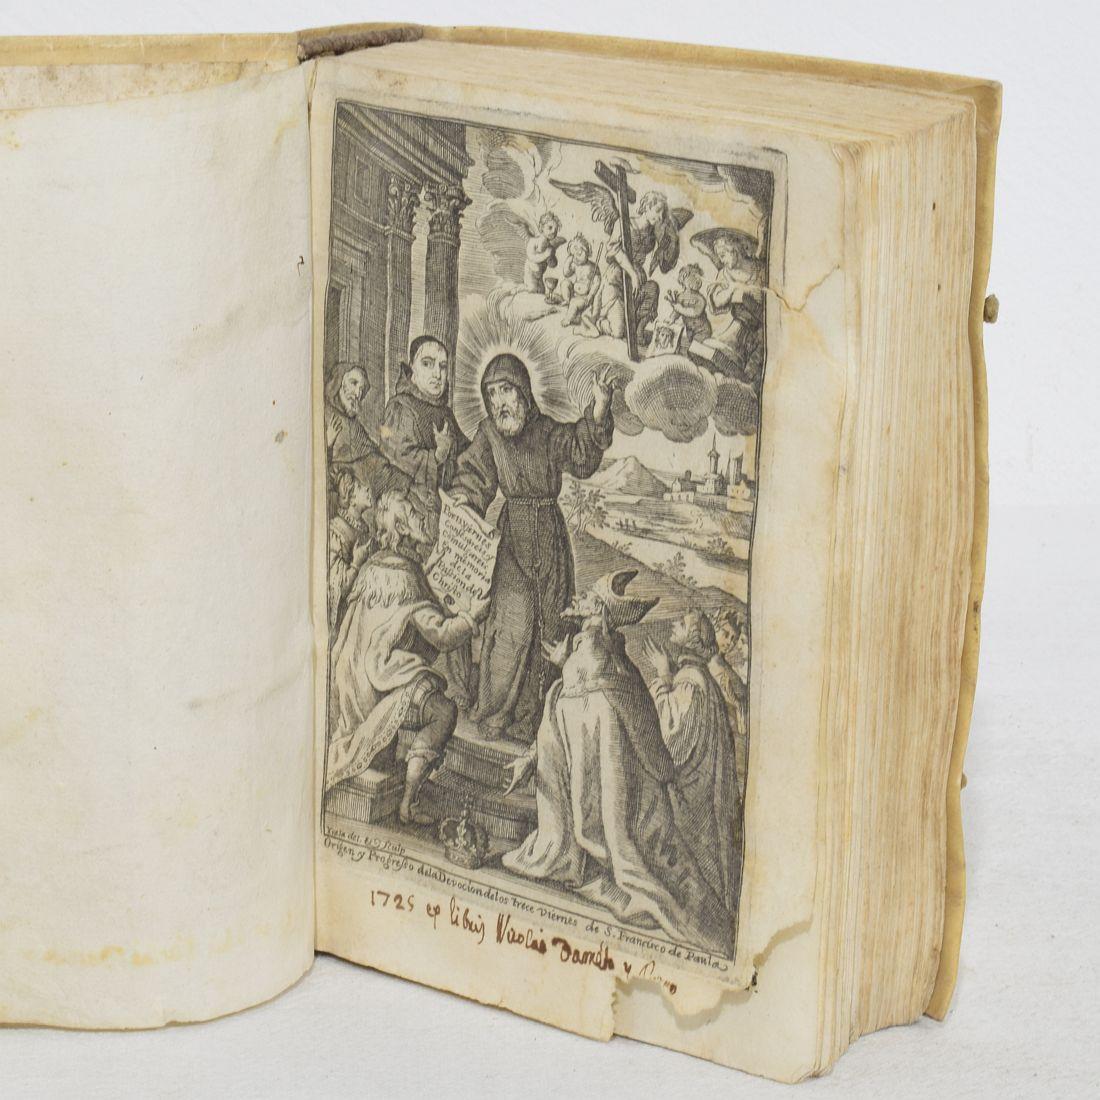 The Collective of 18th Century Weathered Spanish/ Italian Vellum Books (livres en vélin espagnol/italien du 18e siècle) 11